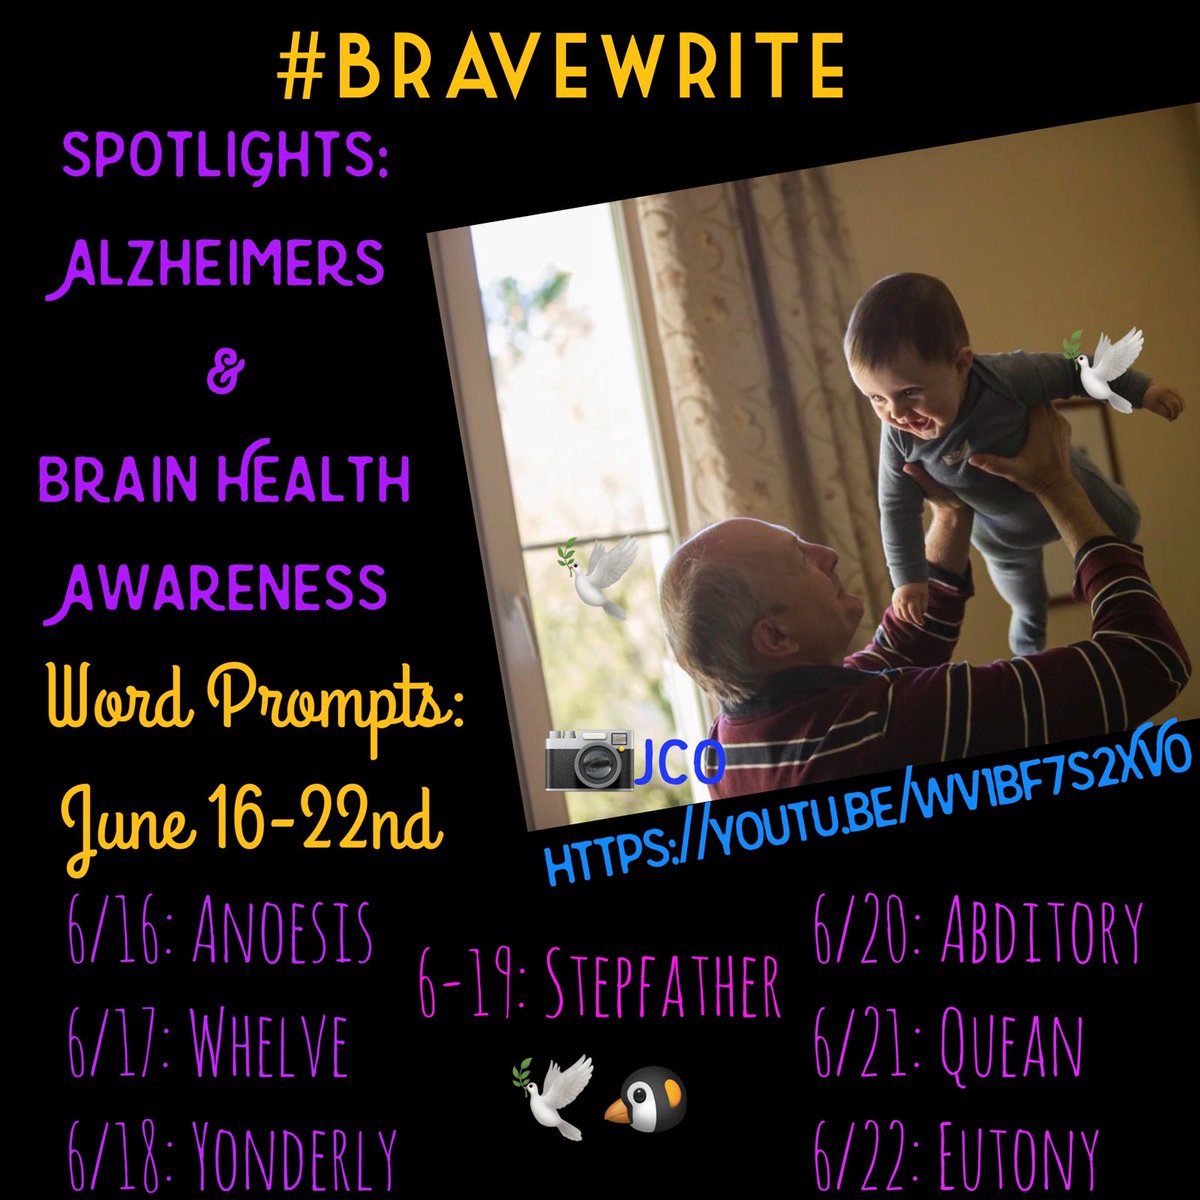 🗣#BraveWrite Prompt Words:
6/16-6/22/22:🐧
          
June 16: Anoesis

June 17: Whelve

June 18: Yonderly

June 19: Stepfather

June 20: Abditory

June 21: Quean

June 22: Eutony

🕊Shines Spotlights On:
#AlzheimersAwareness
& #BrainHealthAwareness
🧷
👇
youtu.be/wv1bf7S2XV0